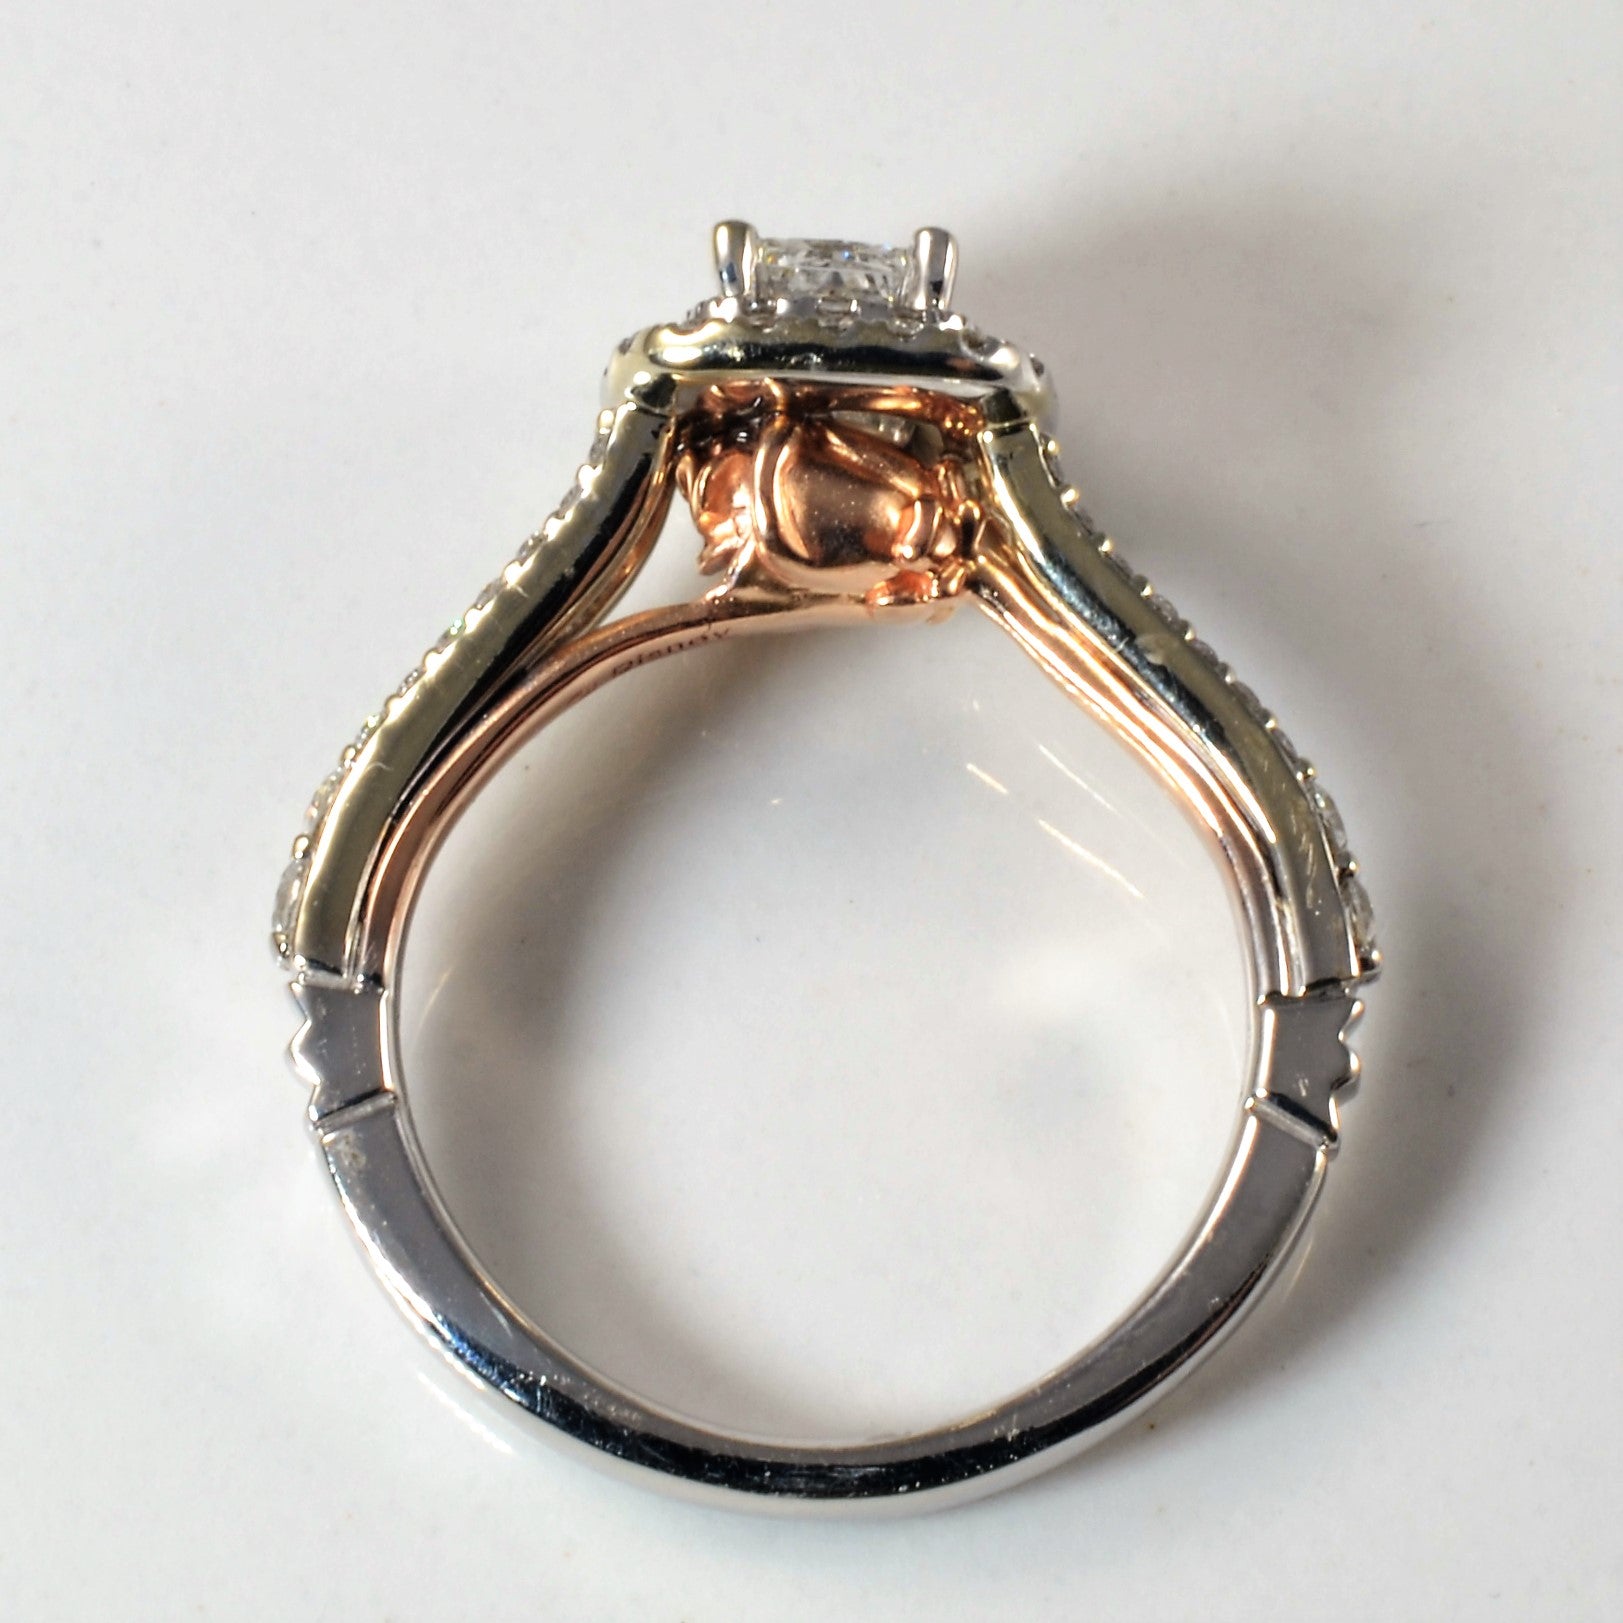 Disney' Enchanted Belle Engagement Ring | 0.75ctw | SZ 5.5 |